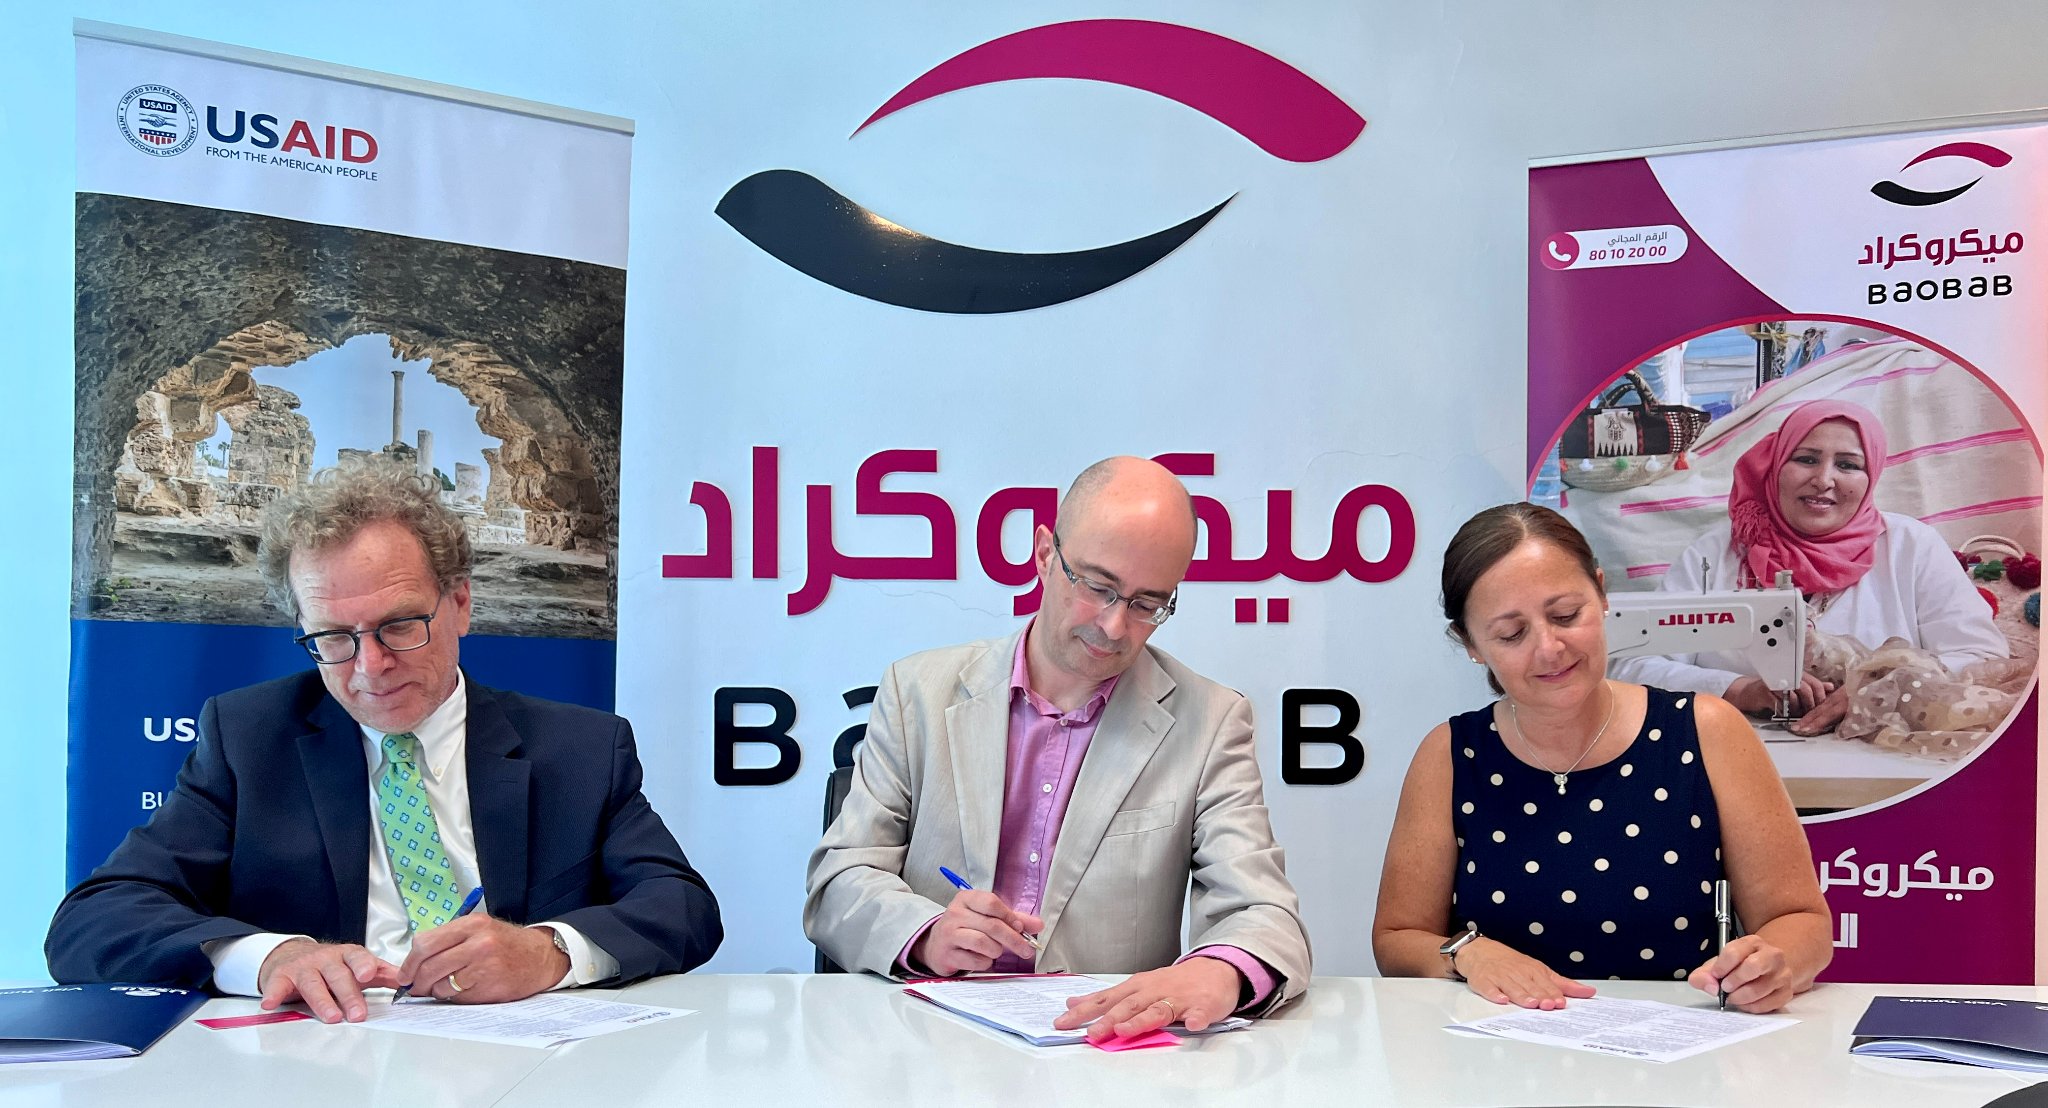 USAID Visit Tunisia/Baobab Partner to Provide Critical Funding to 800 Tourism Entrepreneurs